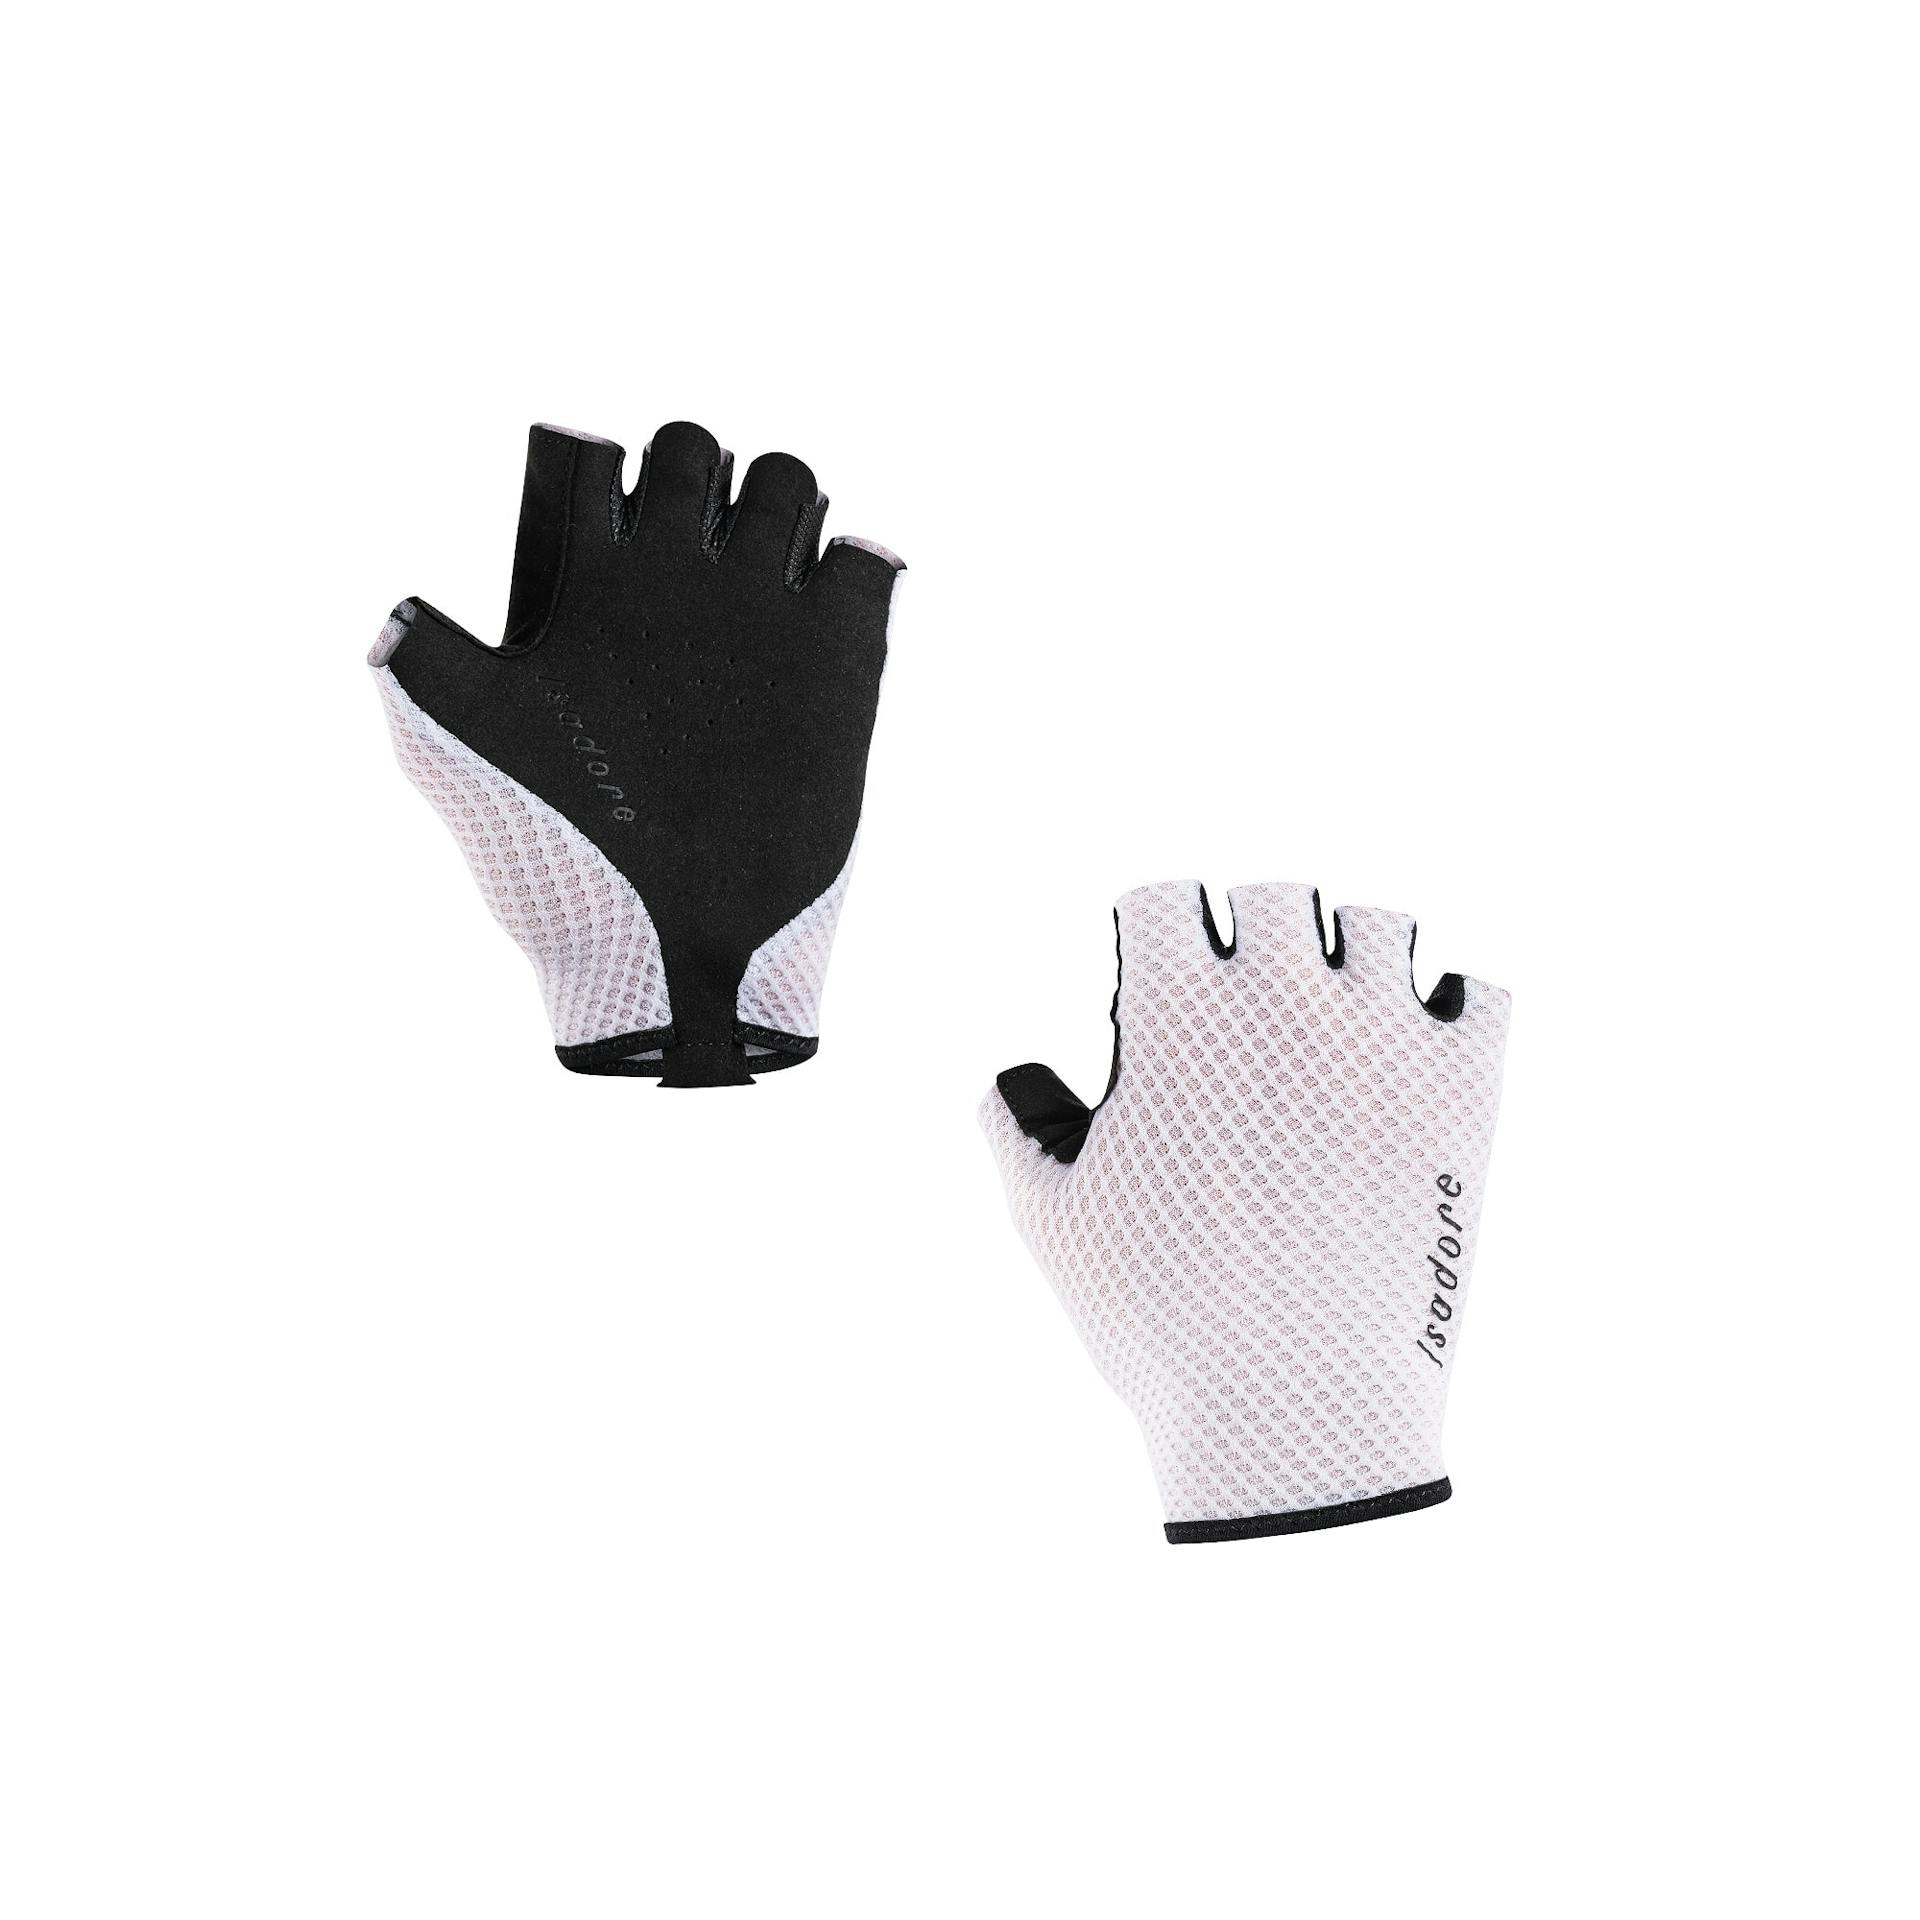 Signature Light Gloves - White
                        